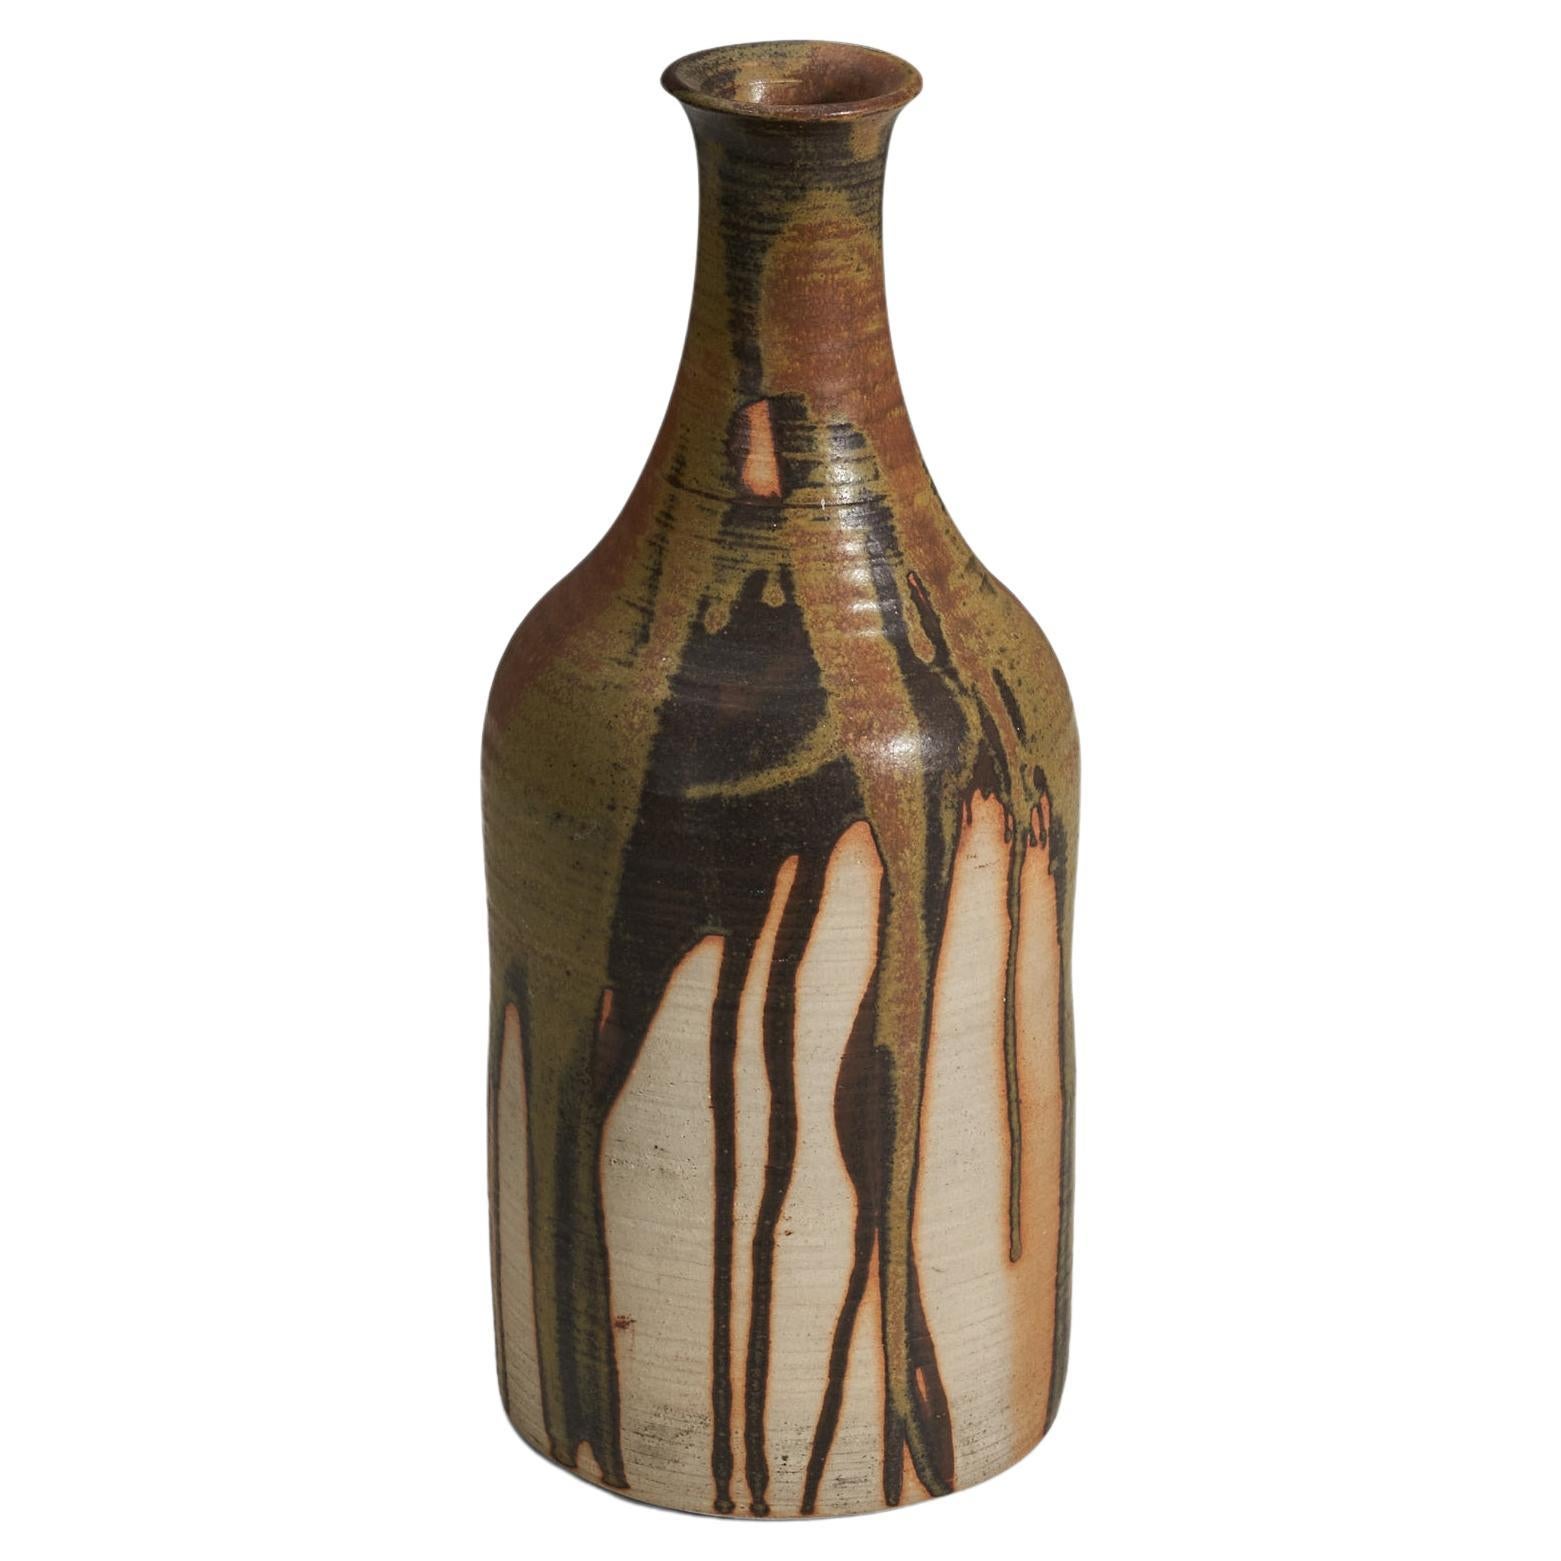 Lise Dirch Jans, Vase, Brown Glazed Stoneware, Denmark, 1975